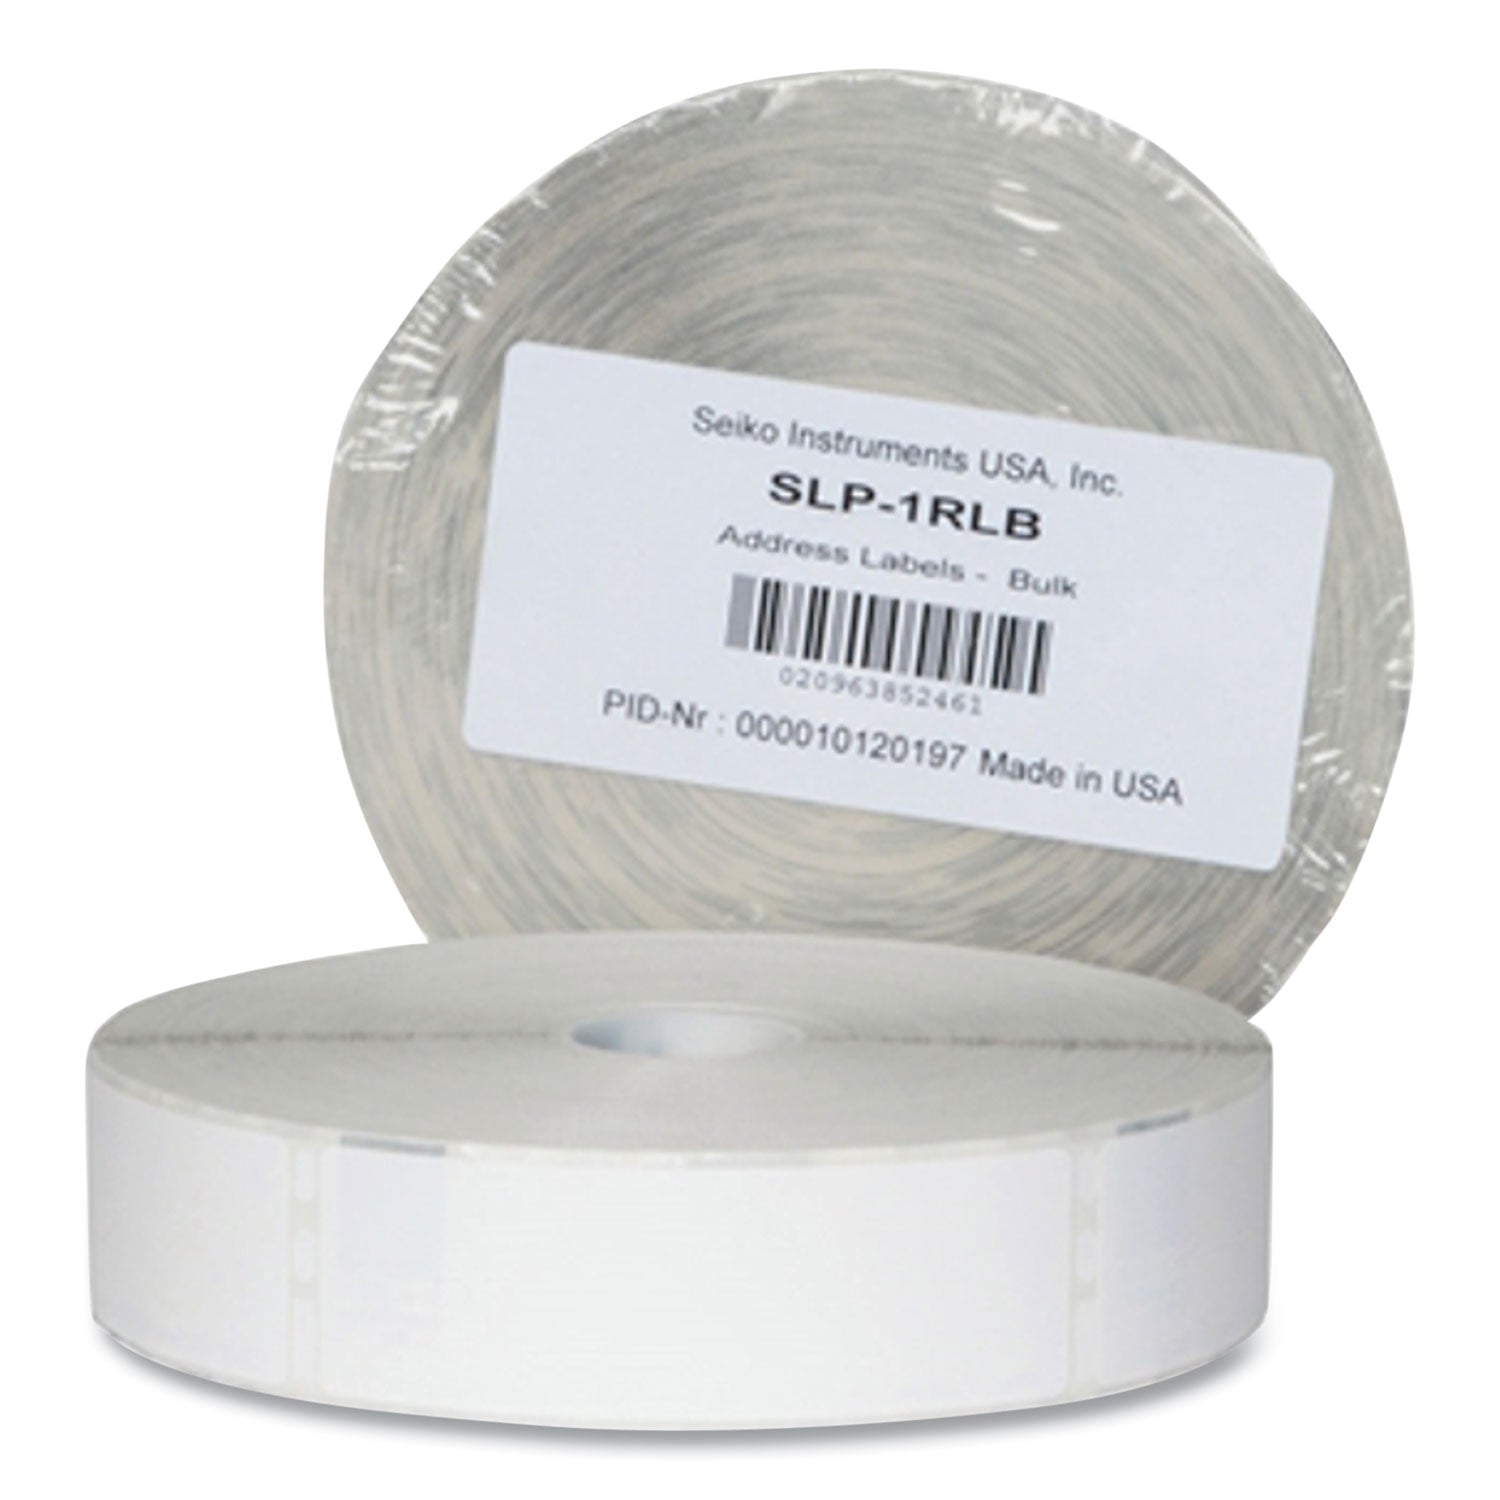 SLP-1RLB Bulk Address Labels, Requires SLP-TRAY650, 1.12" x 3.5", White, 1,000 Labels/Roll - 